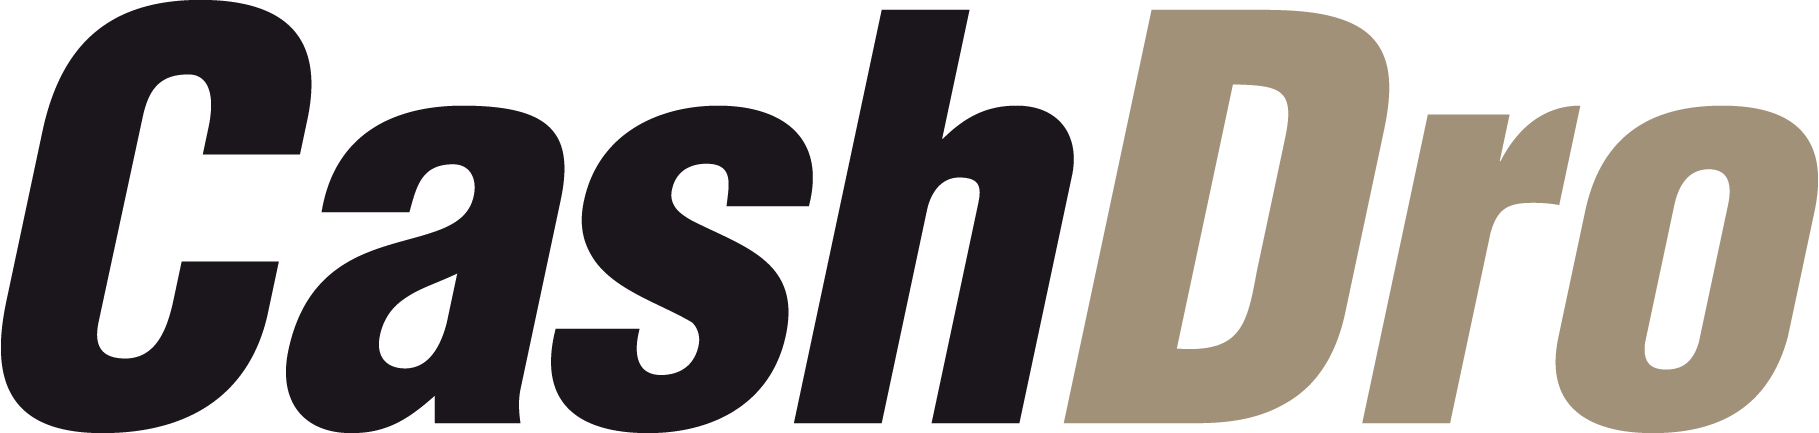 Logo CashDro